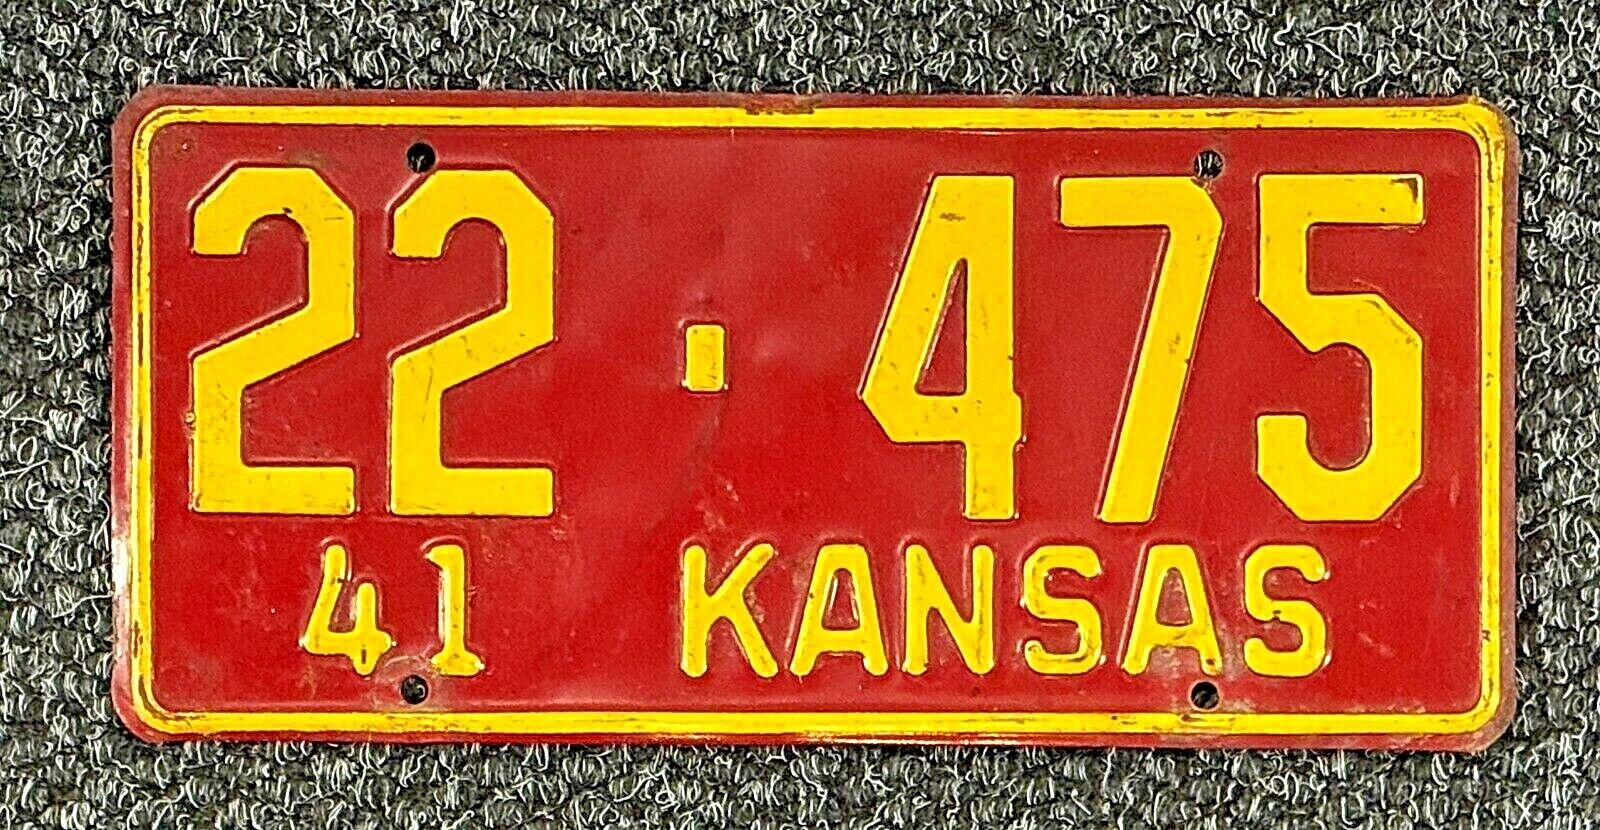 1941 KANSAS license plates – SUPERB ALL ORIGINAL vintage antique auto tags